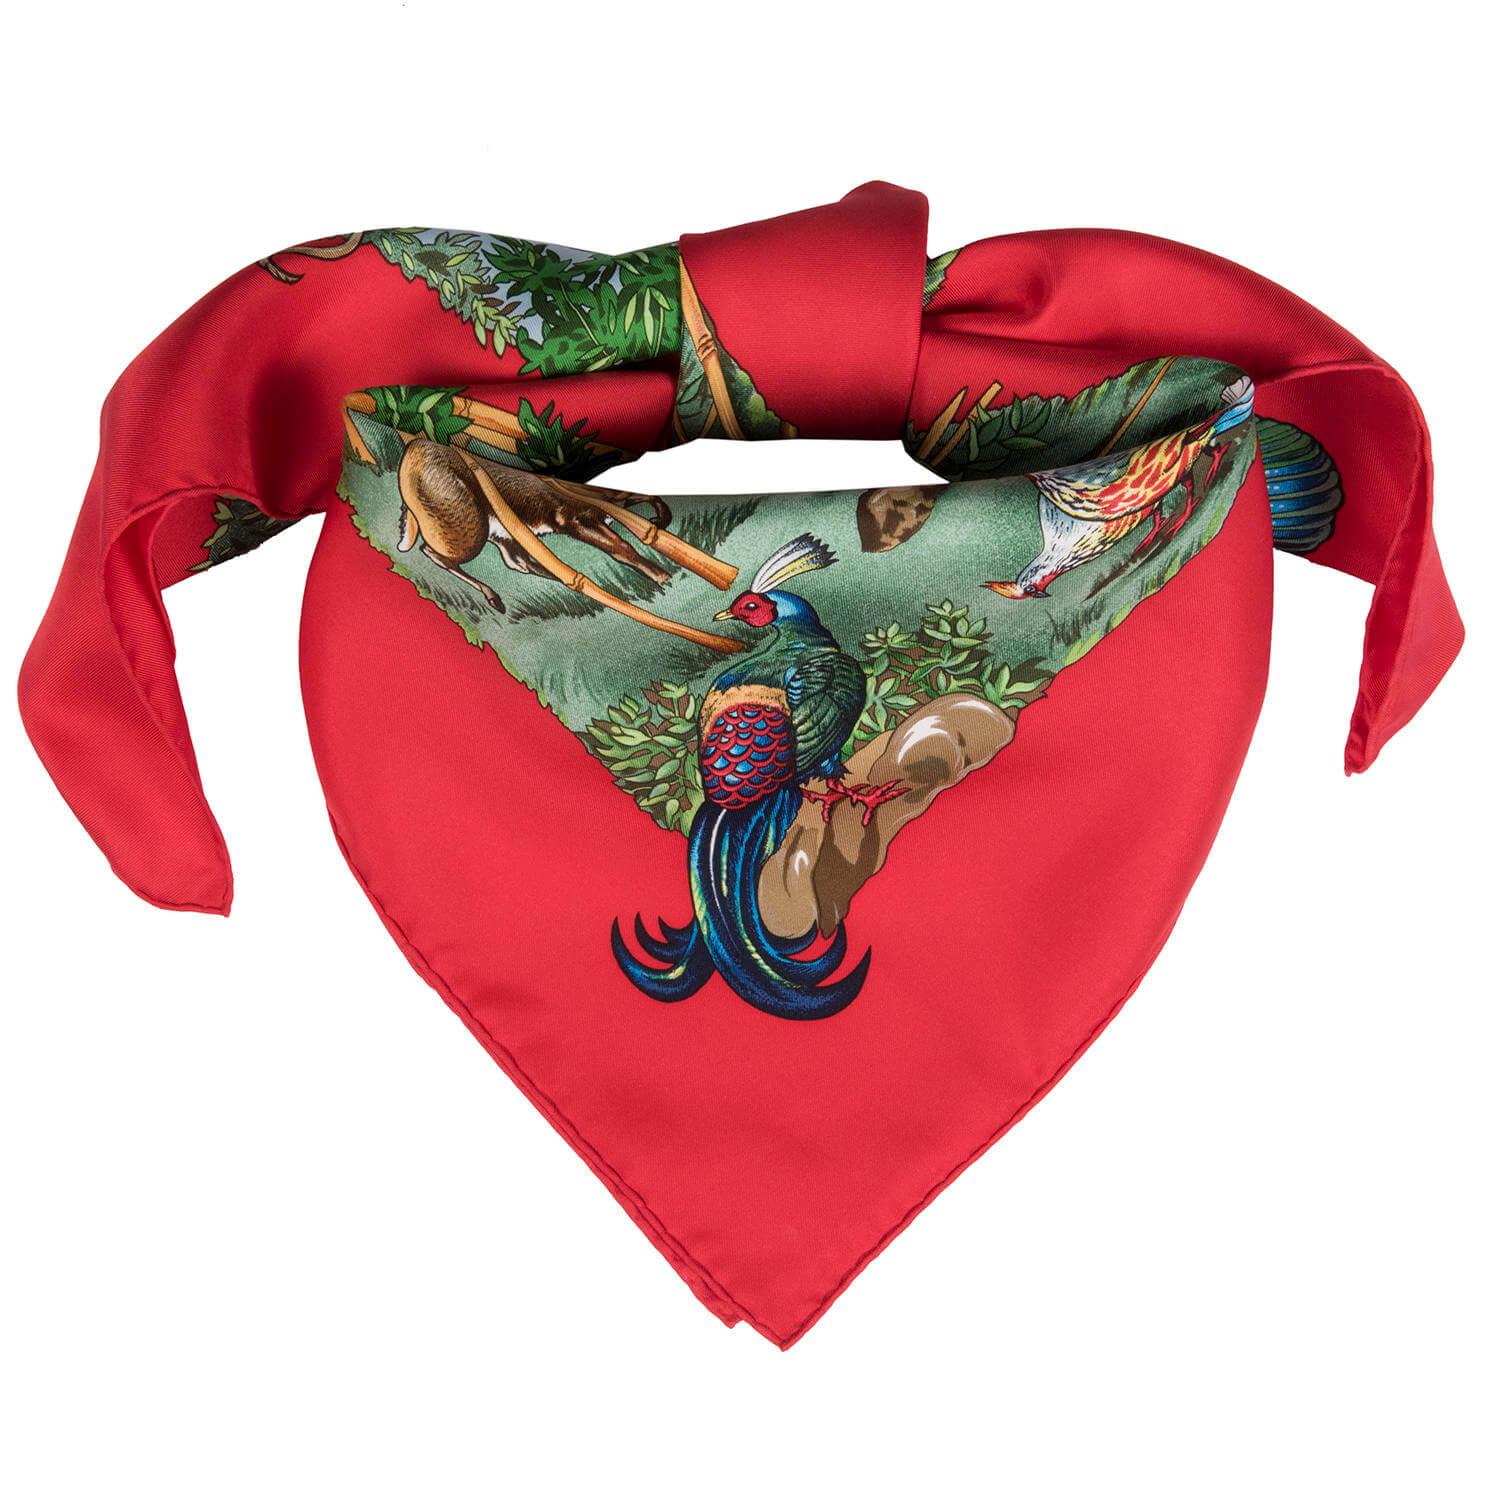 Pristine Vintage Hermes Silk Scarf 'Sichuan' by Robert Dallet